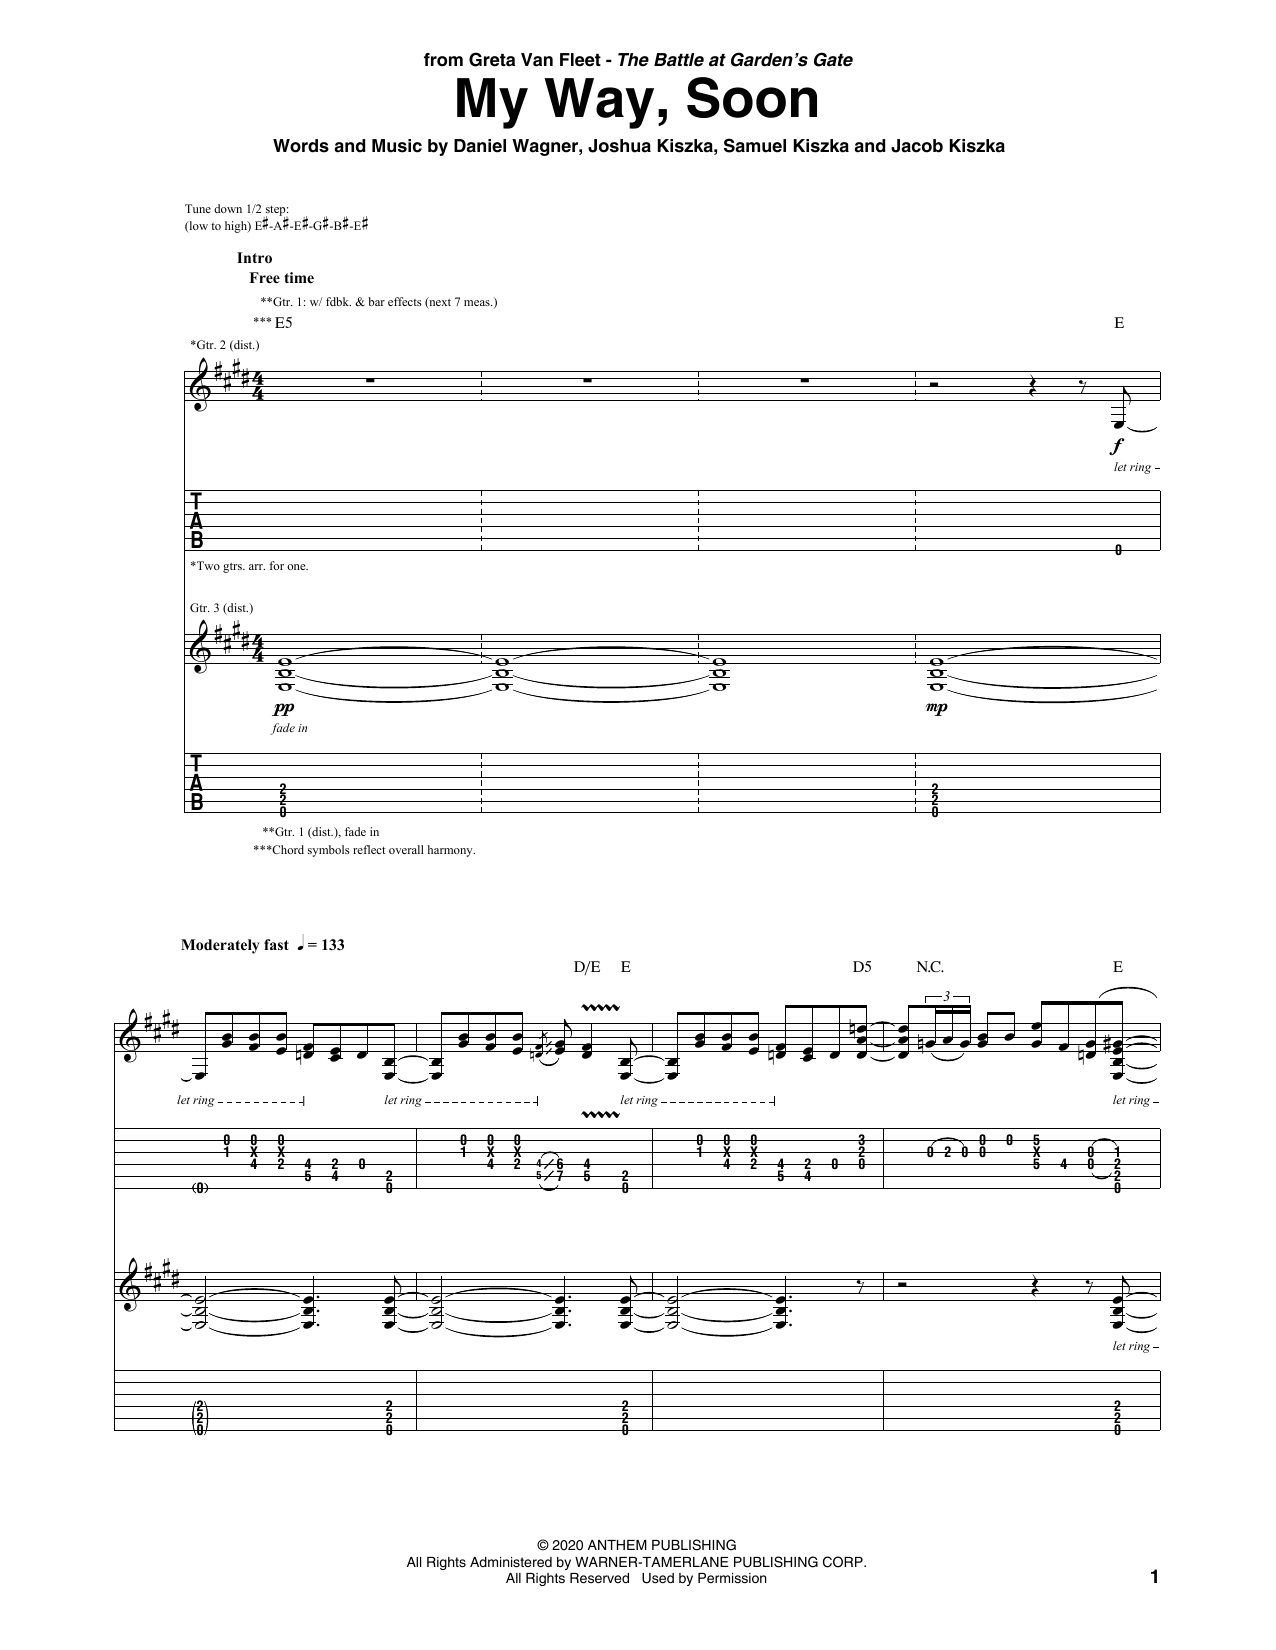 Greta Van Fleet My Way, Soon Sheet Music Notes & Chords for Guitar Tab - Download or Print PDF